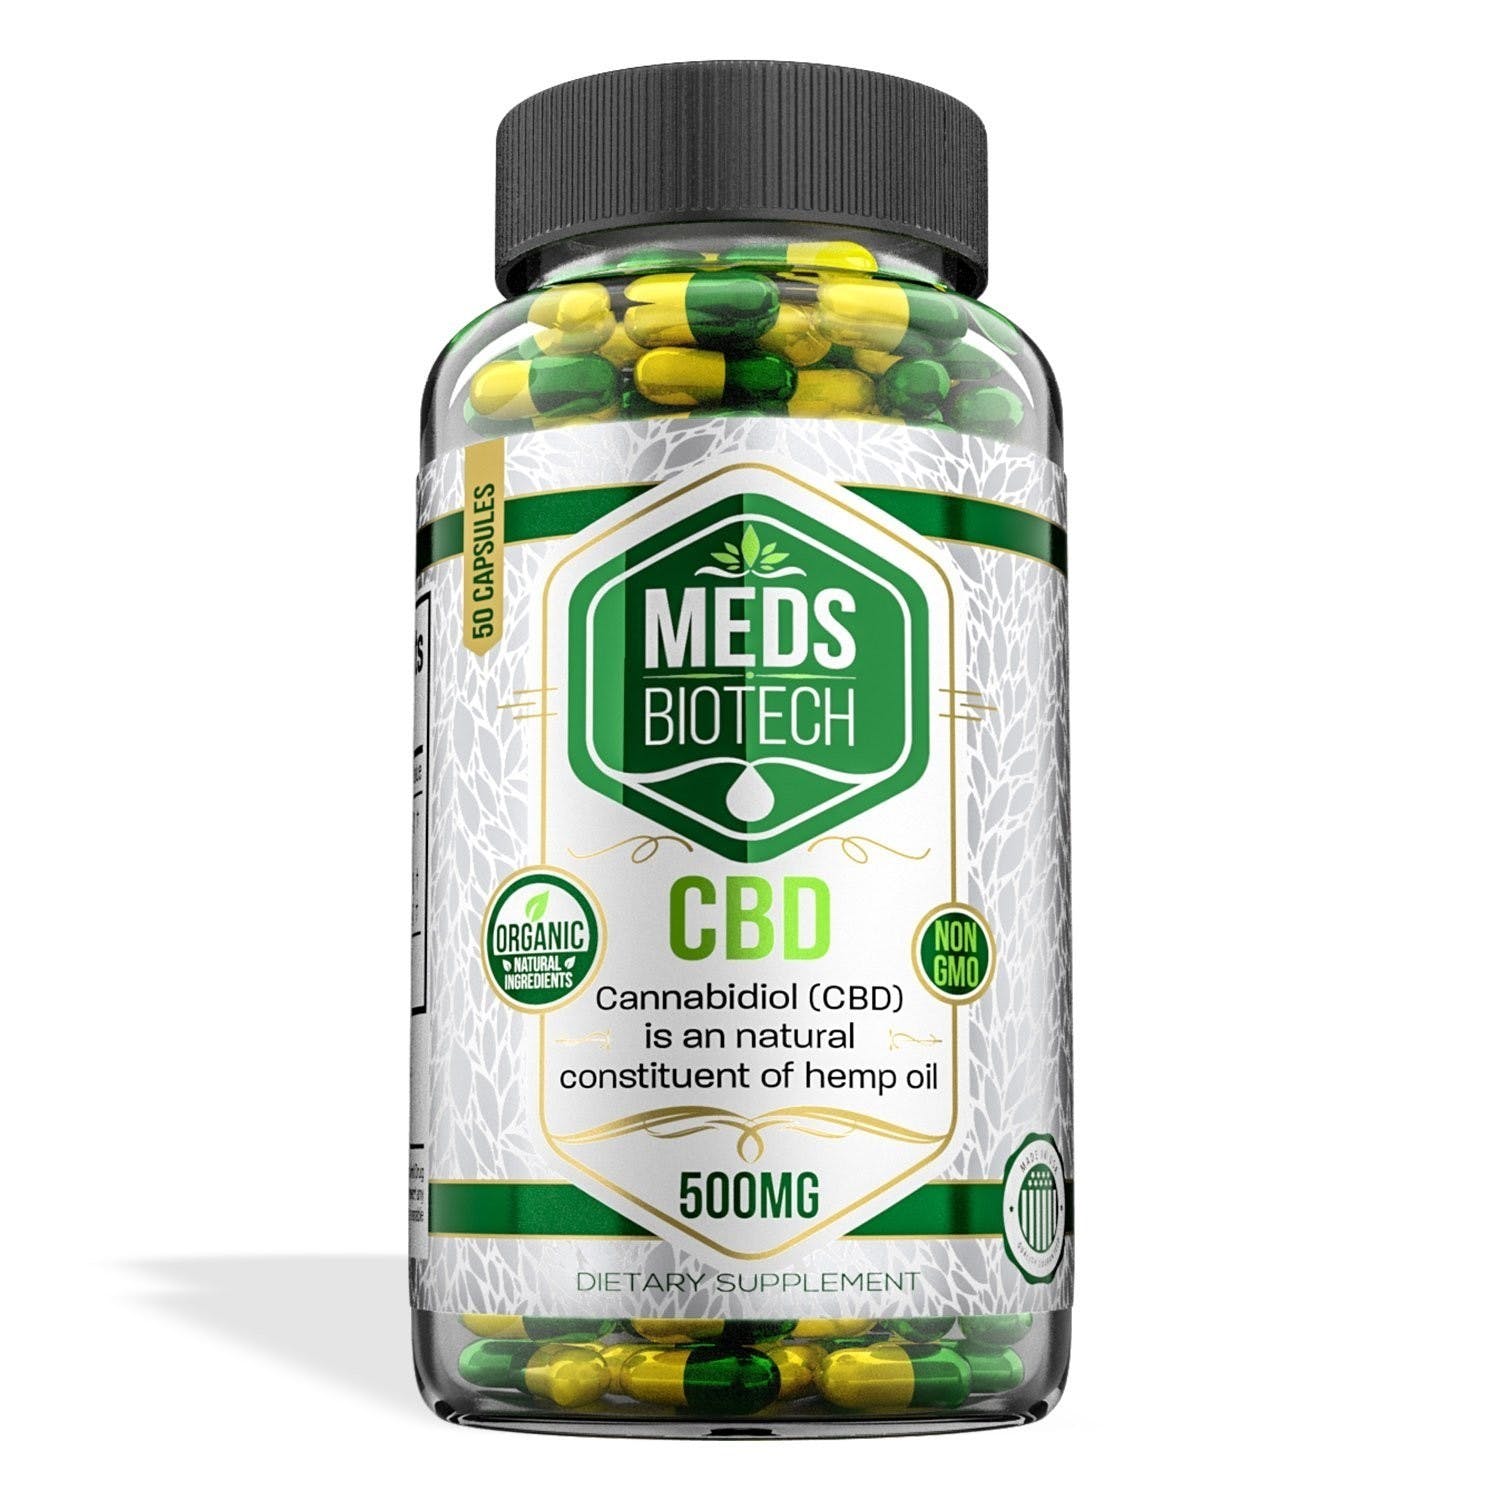 marijuana-dispensaries-cbd-shop-in-laguna-hills-meds-biotech-cbd-capsules-500mg